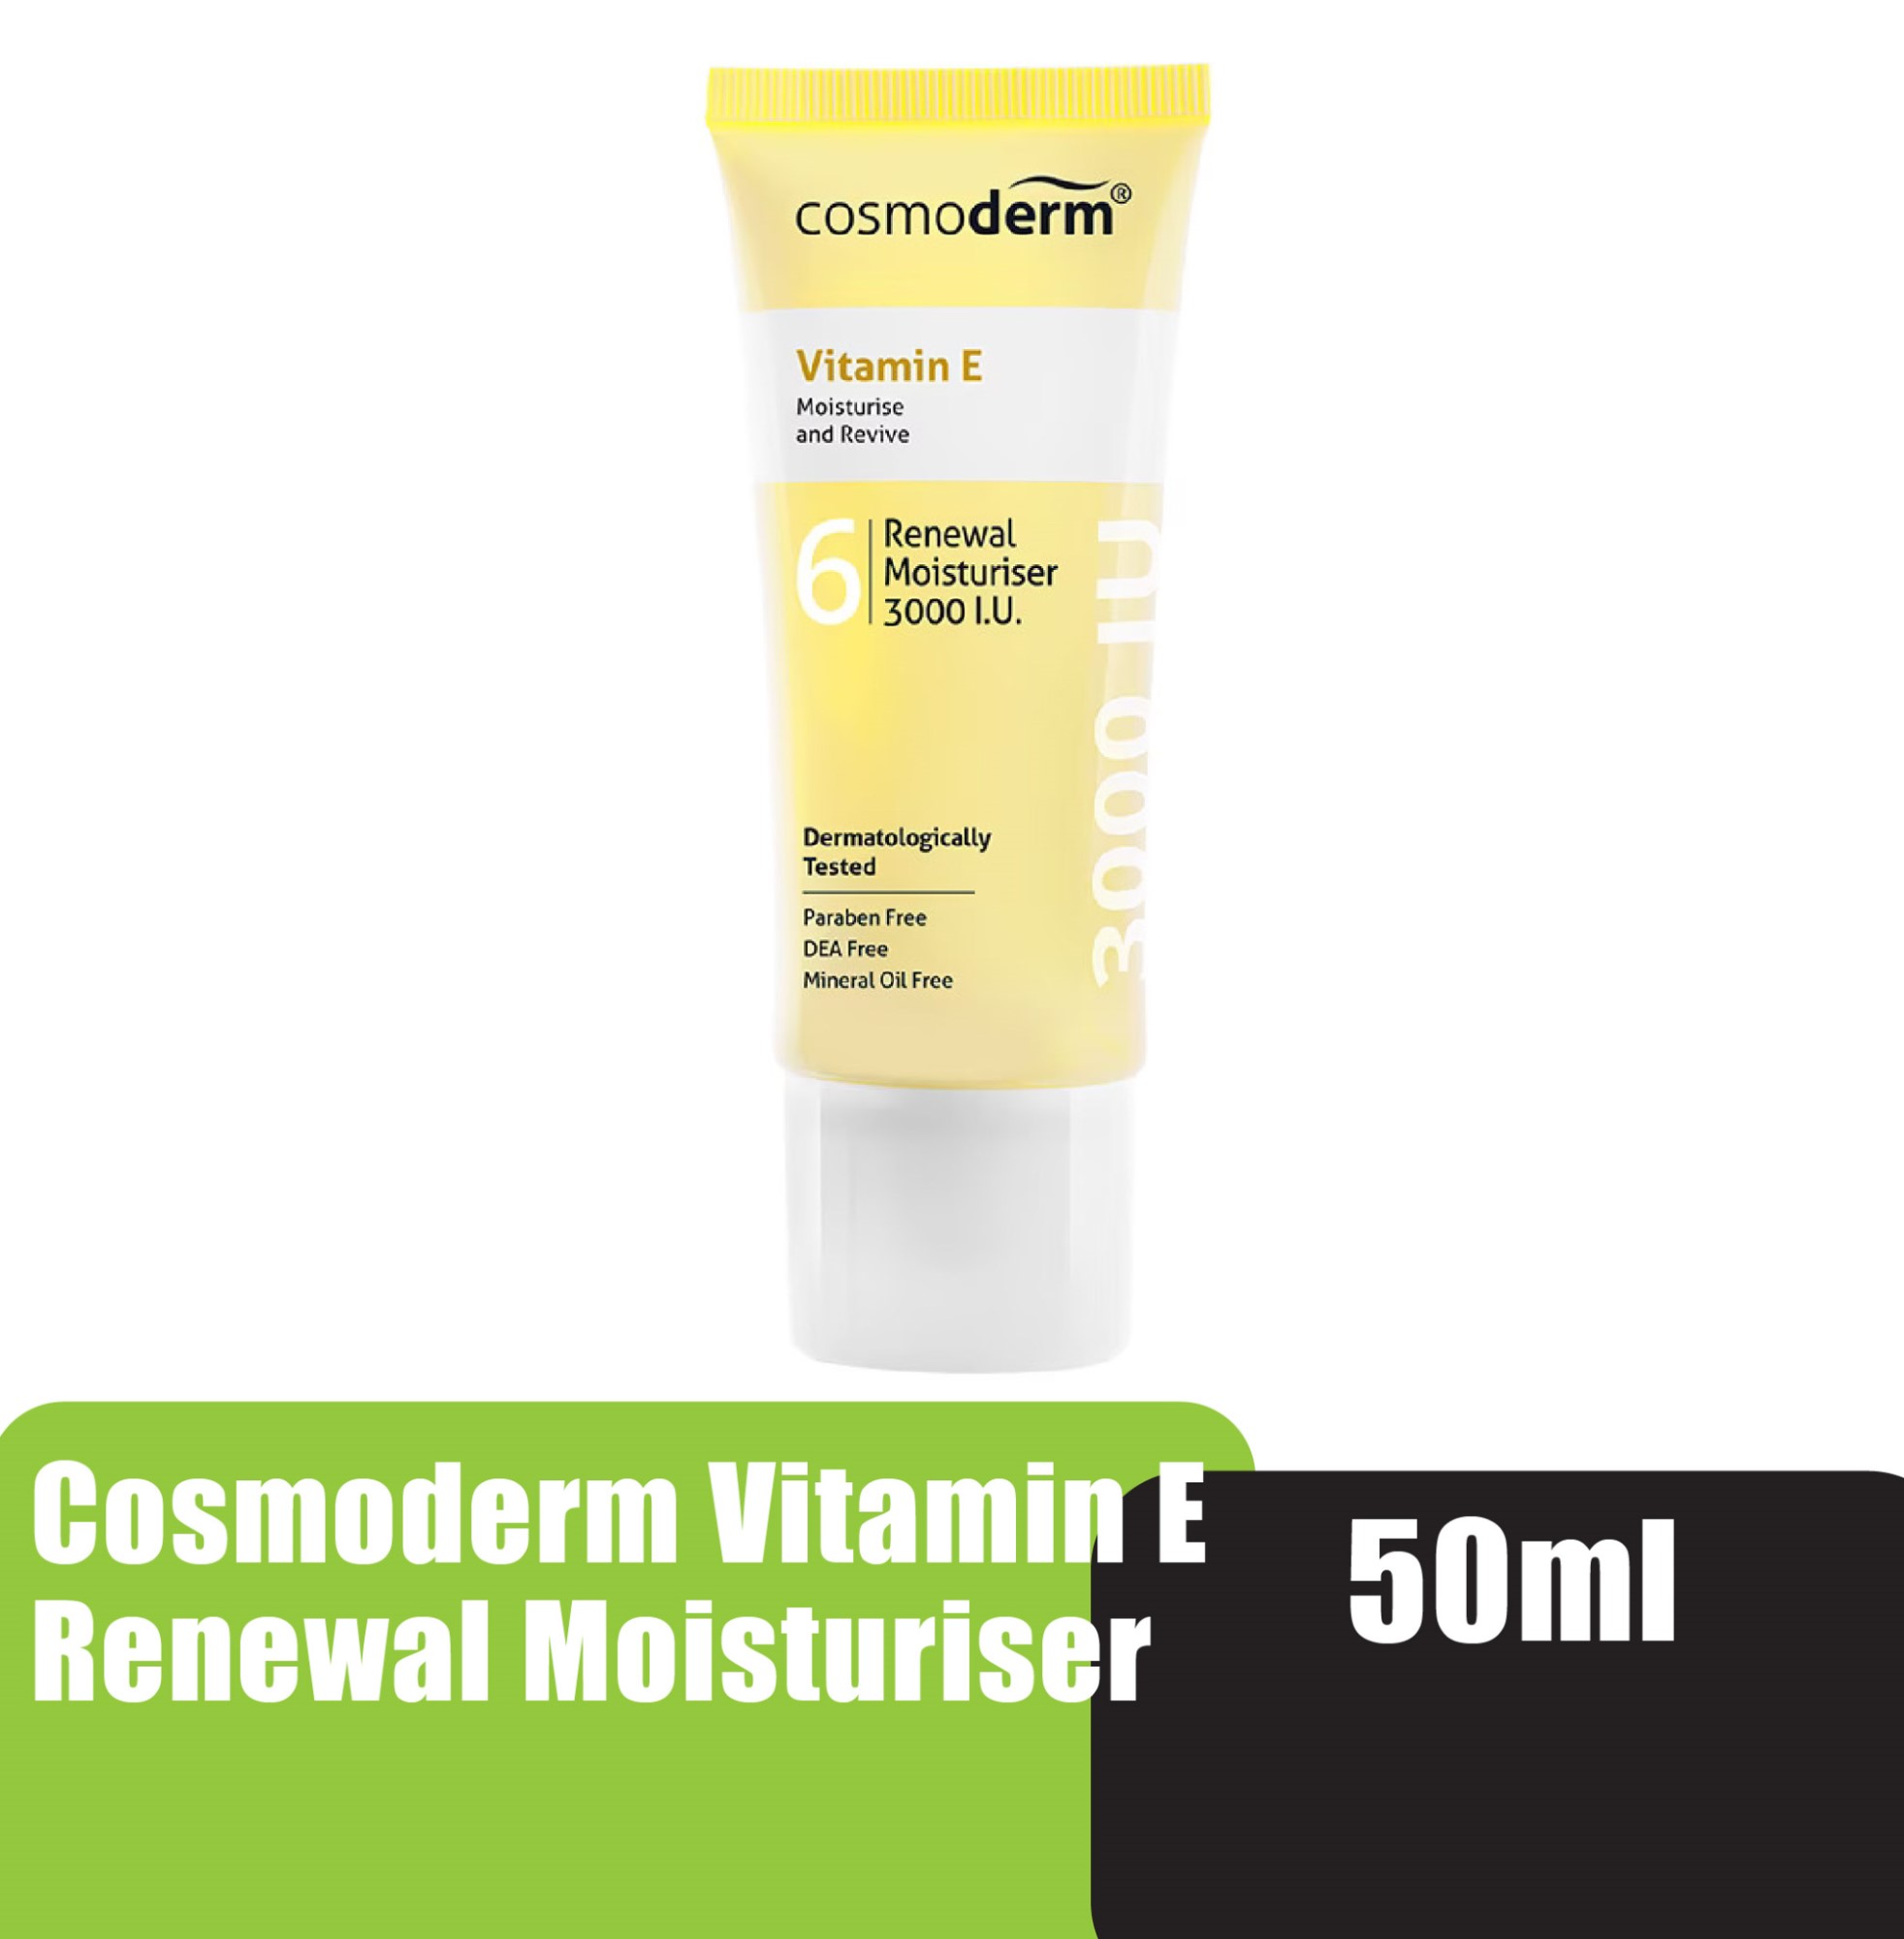 Cosmoderm Vitamin E Renewal Moisturiser 3000 I.U. 50ml